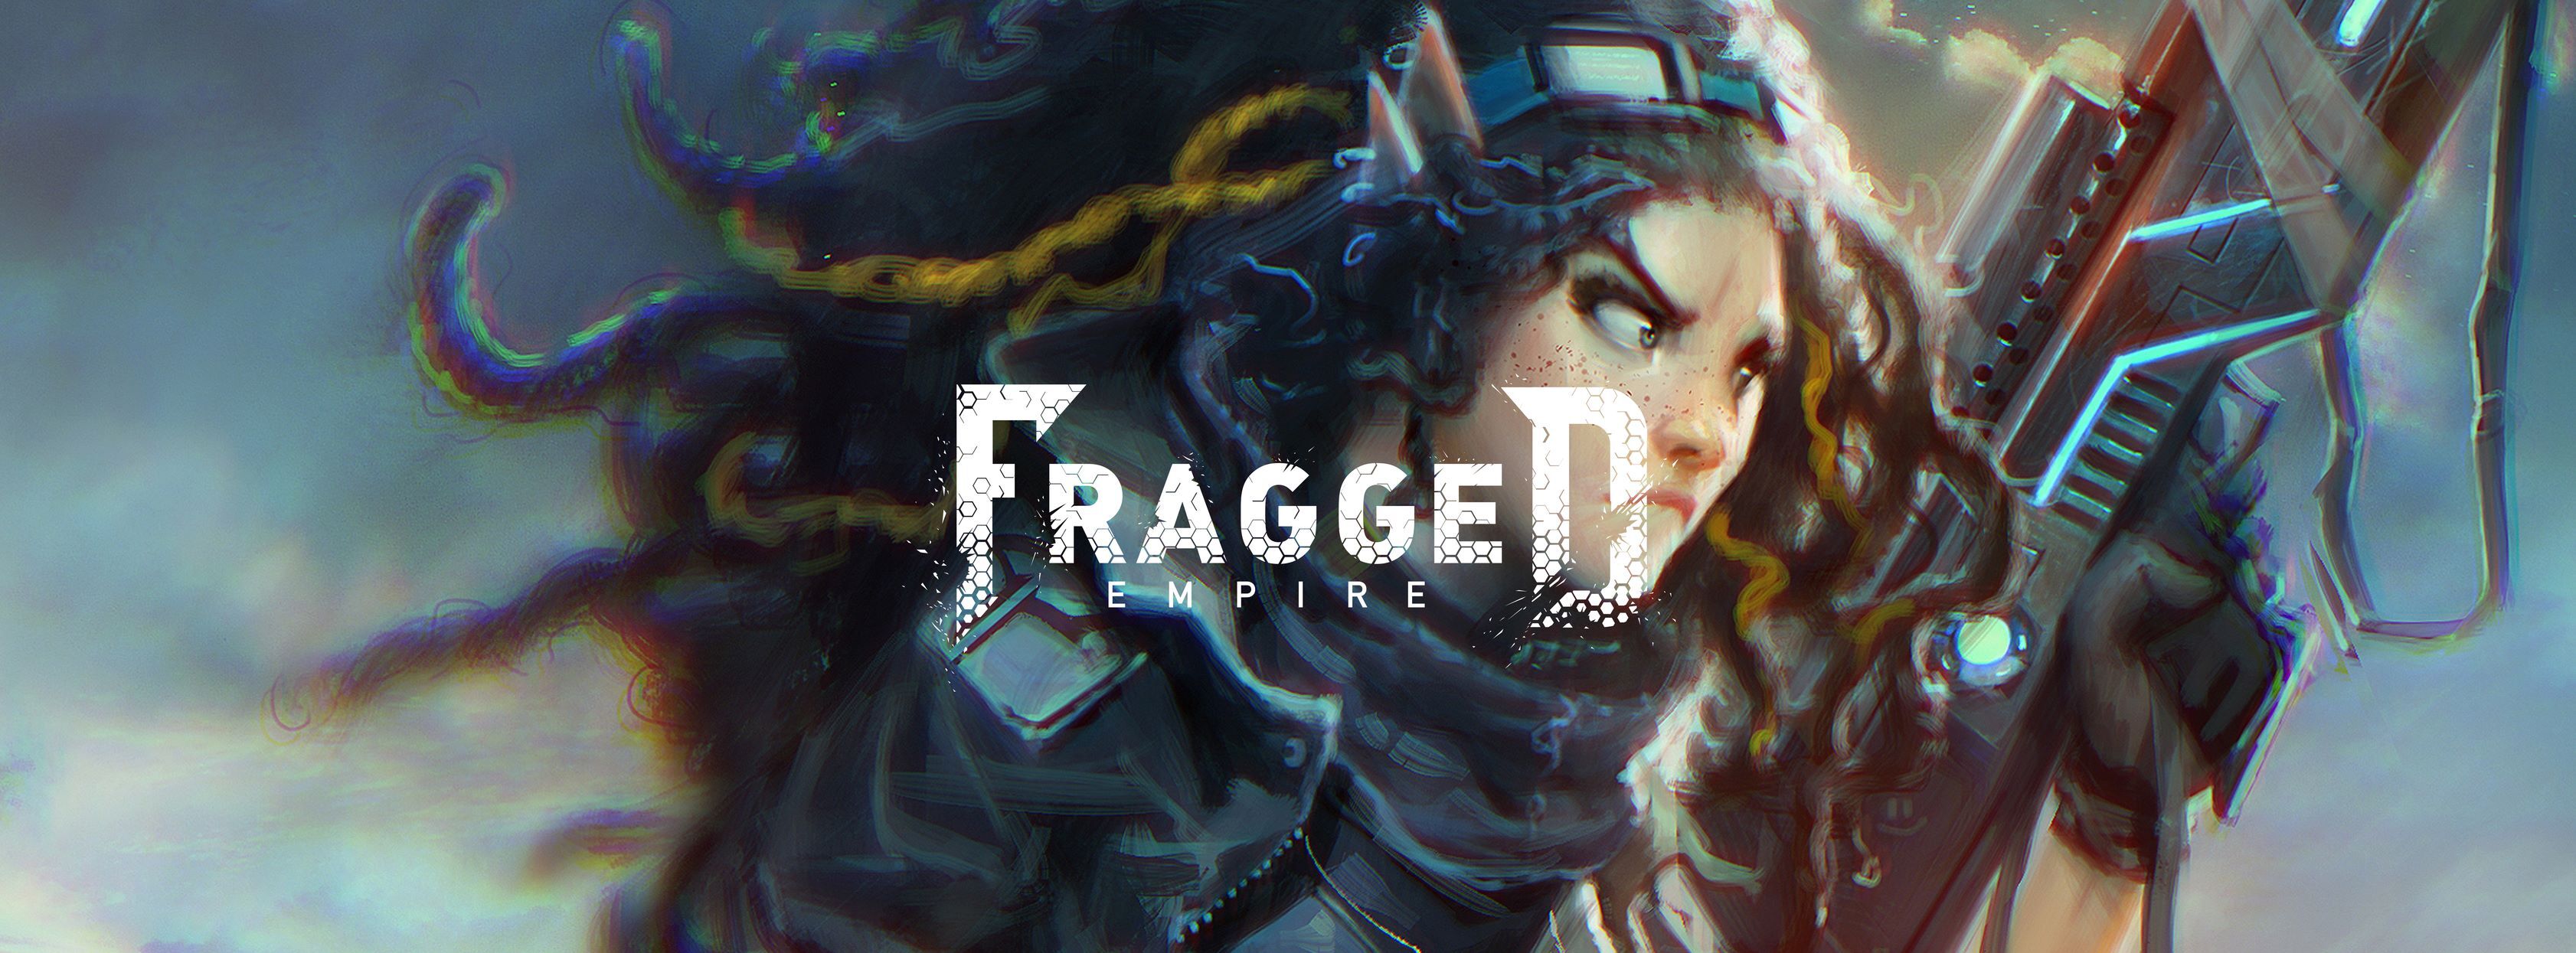 Fragged_Empire.jpg